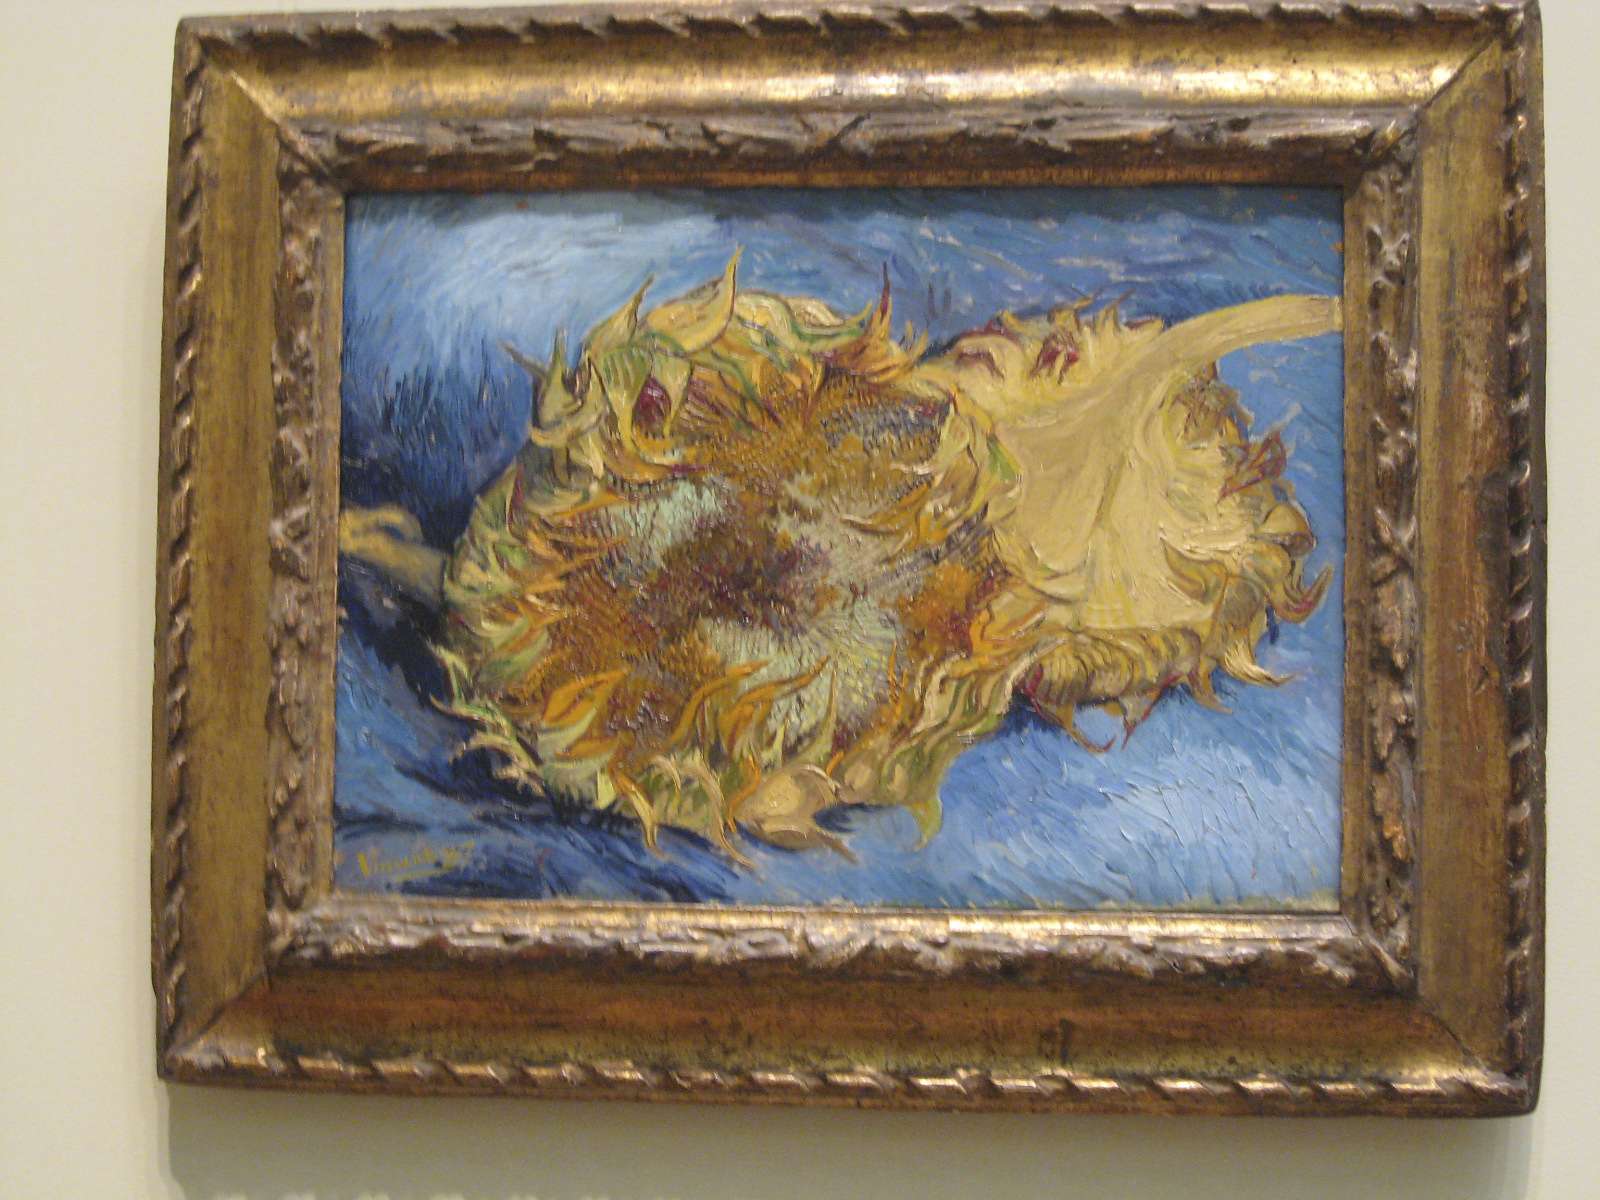 The Art of Painting: Van Gogh